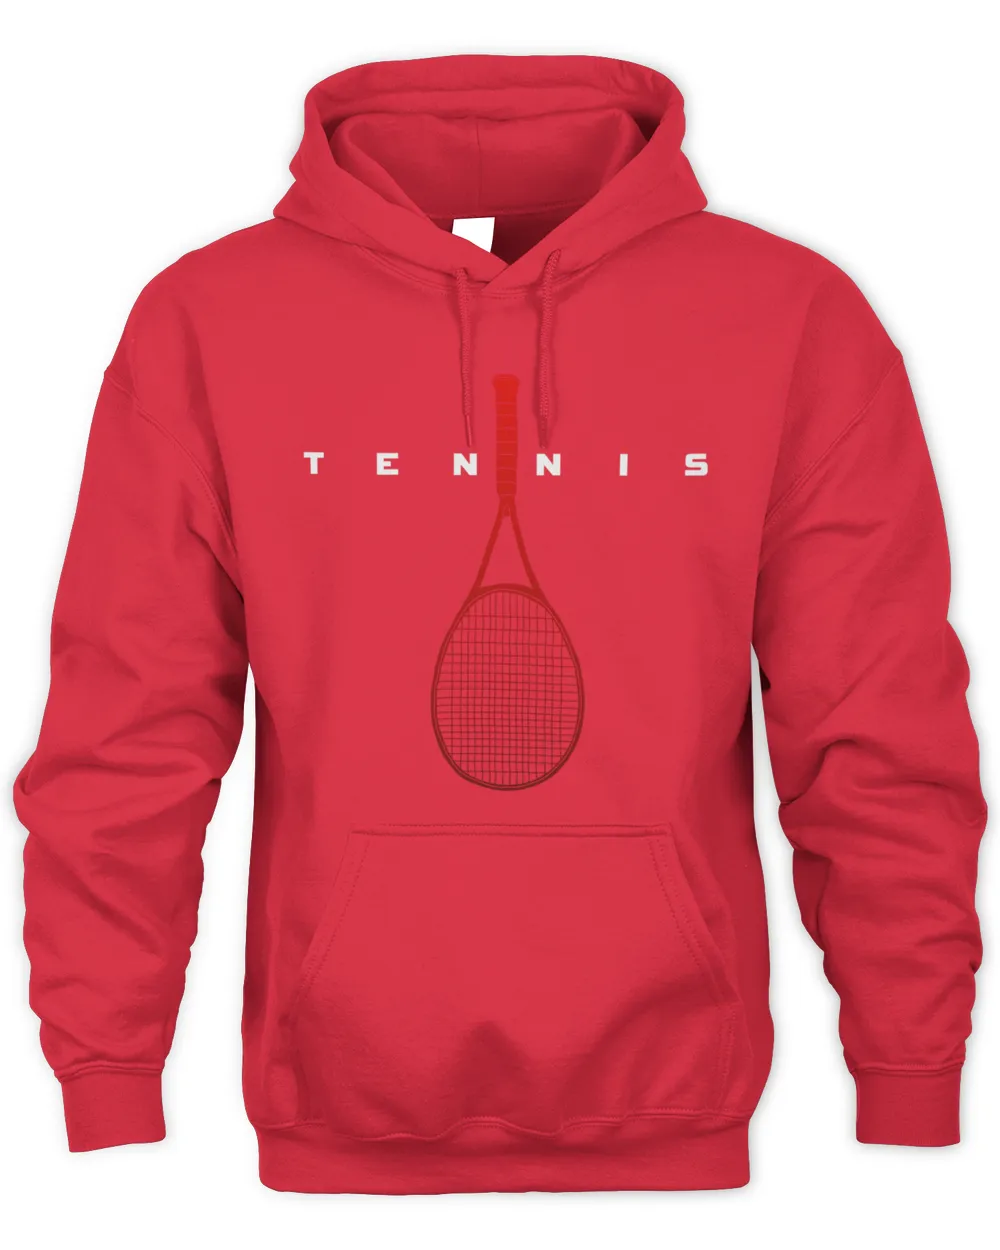 Exclusive tennis shirt